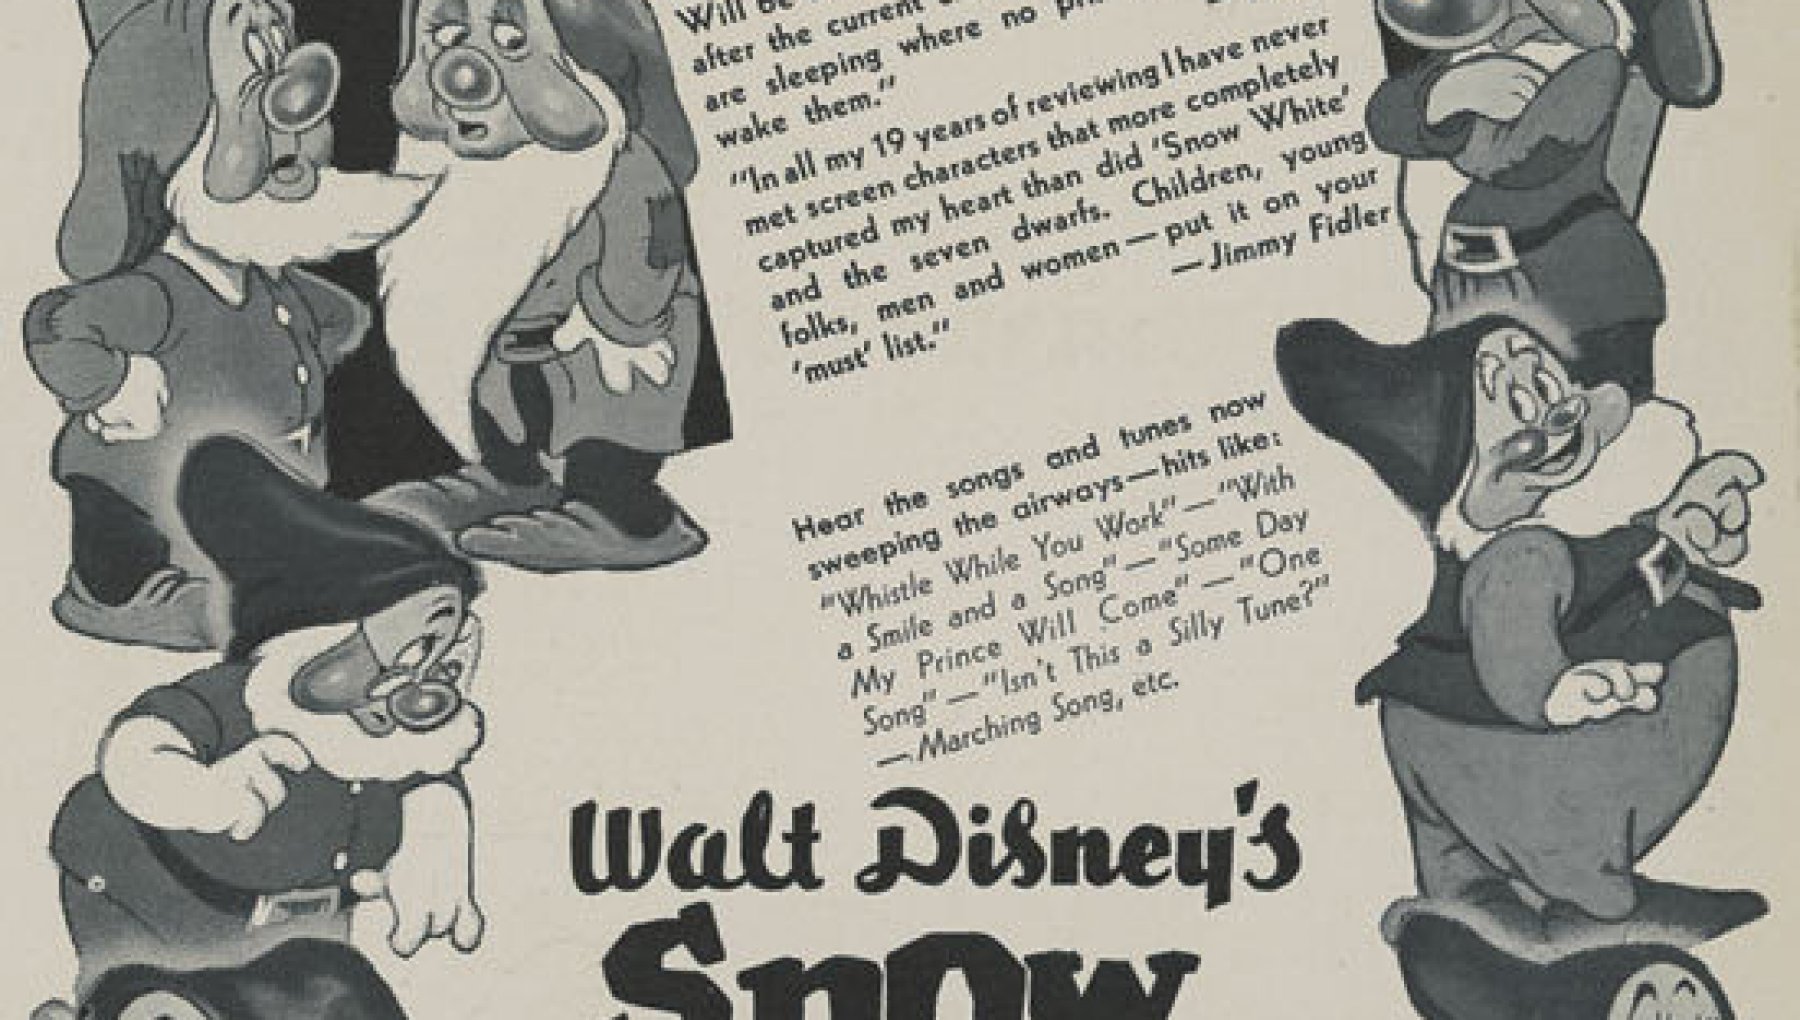 Debutta e trionfa Biancaneve, e per l’emozione Walt Disney si scorda i nomi dei sette nani